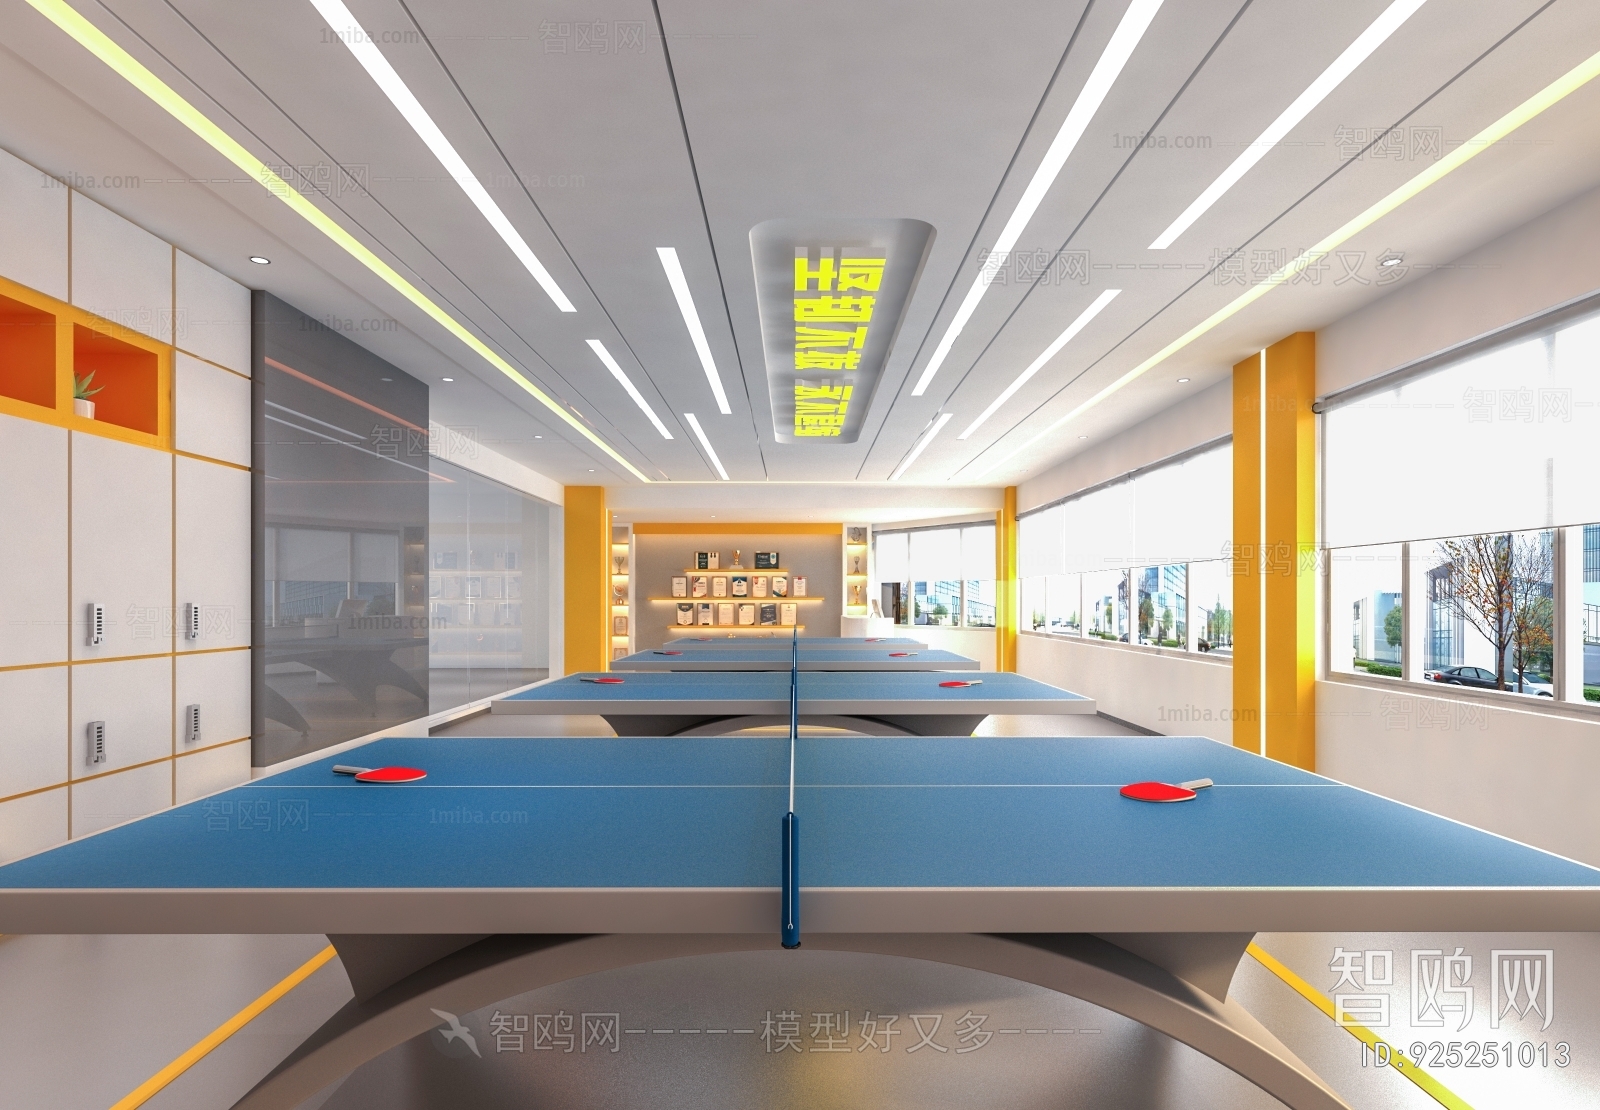 Modern Table Tennis Arena